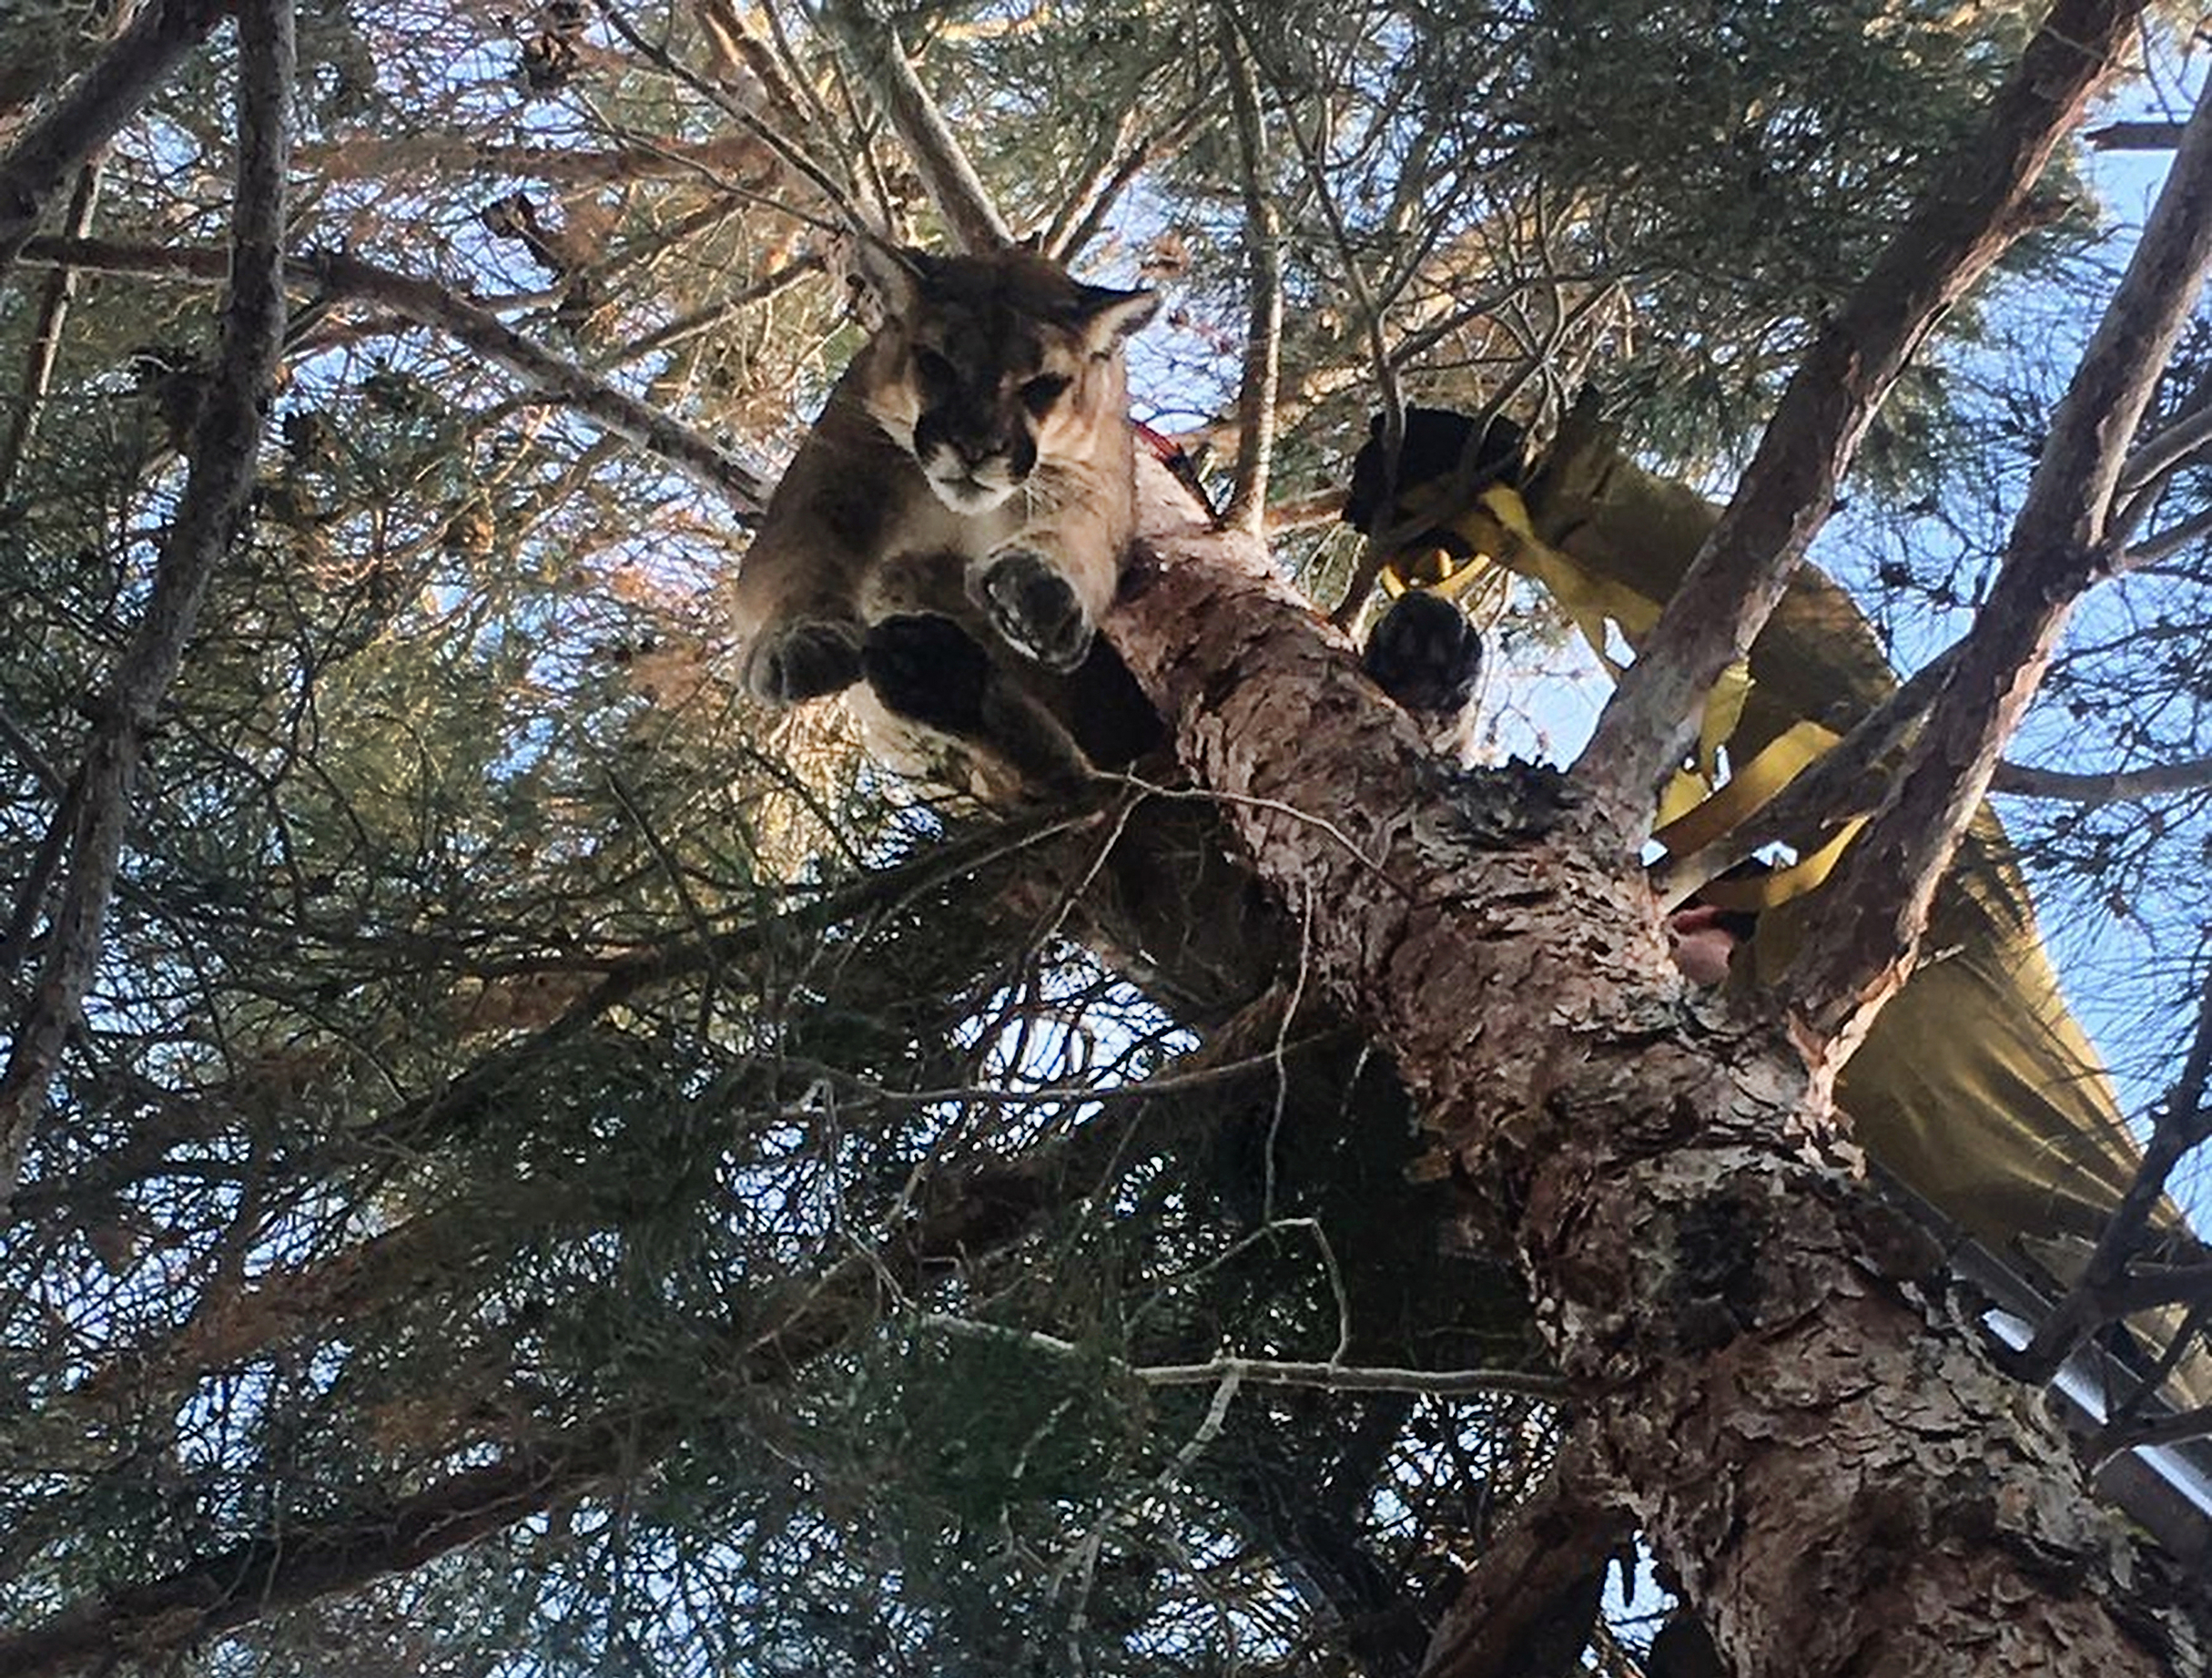 ‘Big cat’ on tree causes stir in California